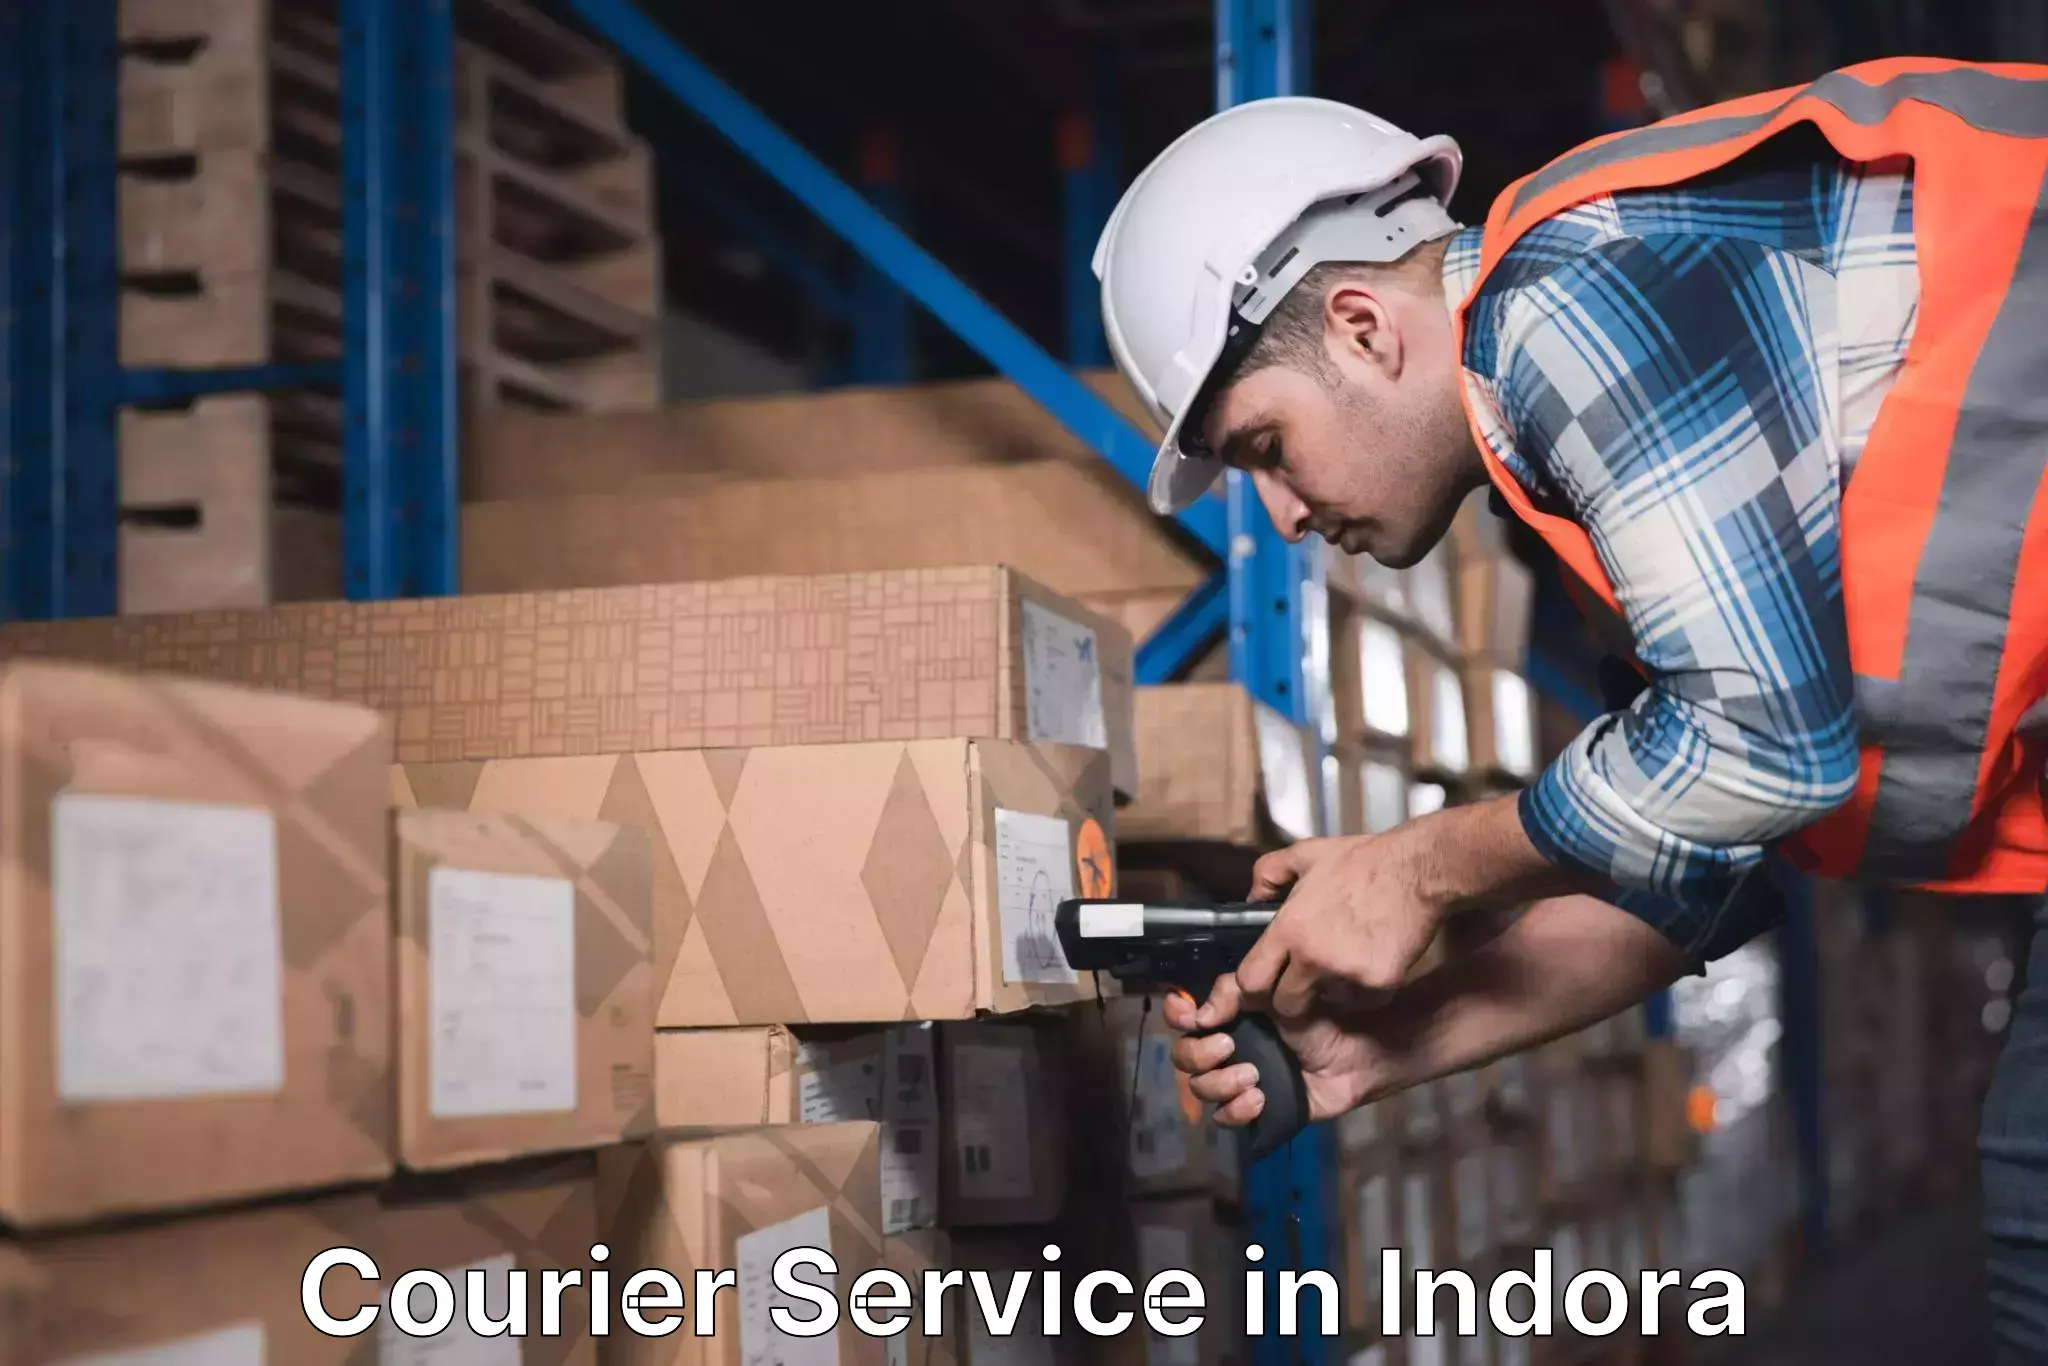 Fastest parcel delivery in Indora